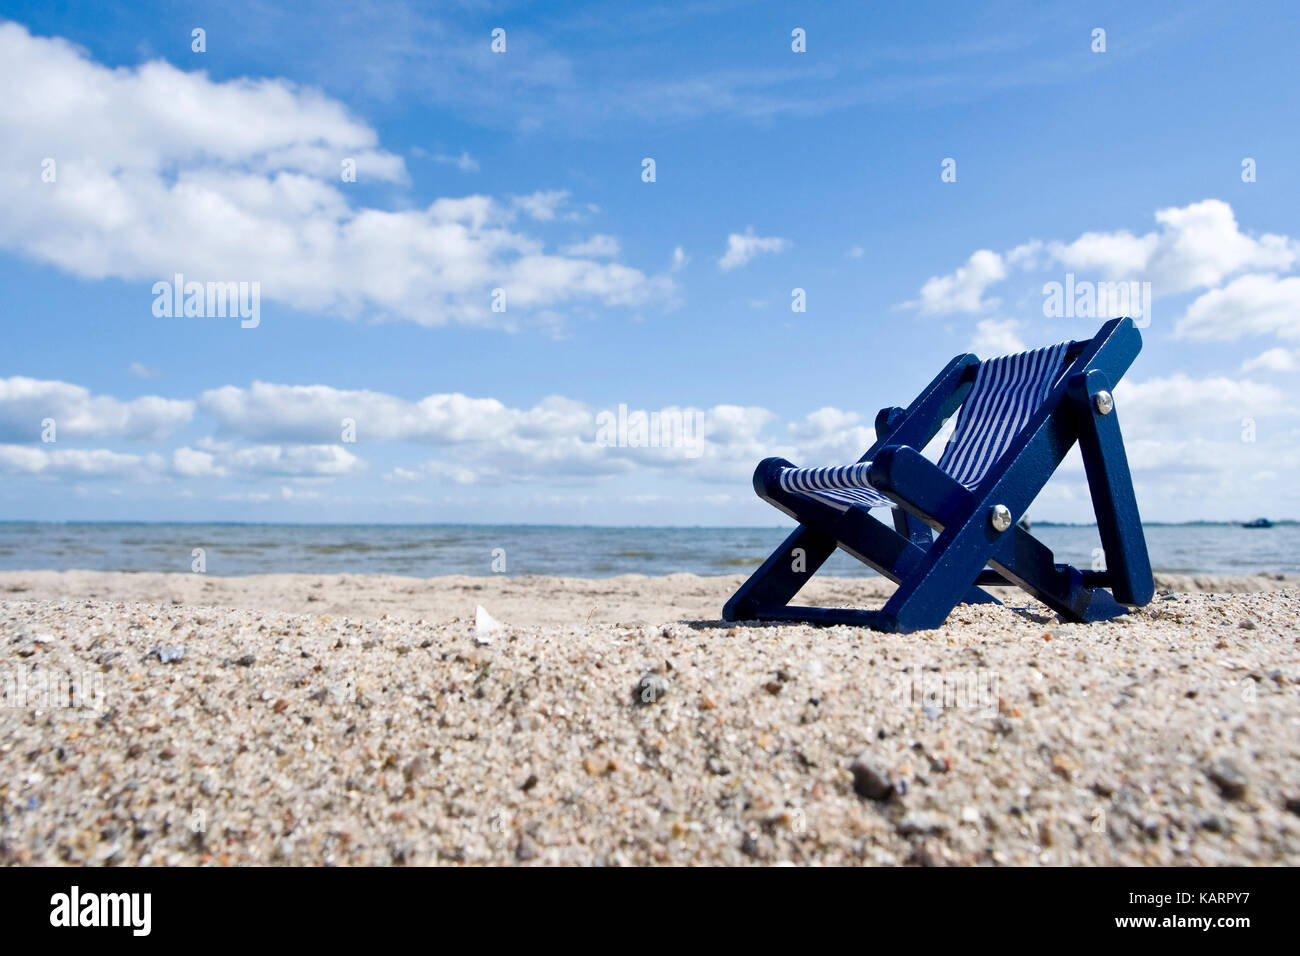 Baltic coast, deck chair on the beach, Ostseekueste, Liegestuhl am Strand Stock Photo